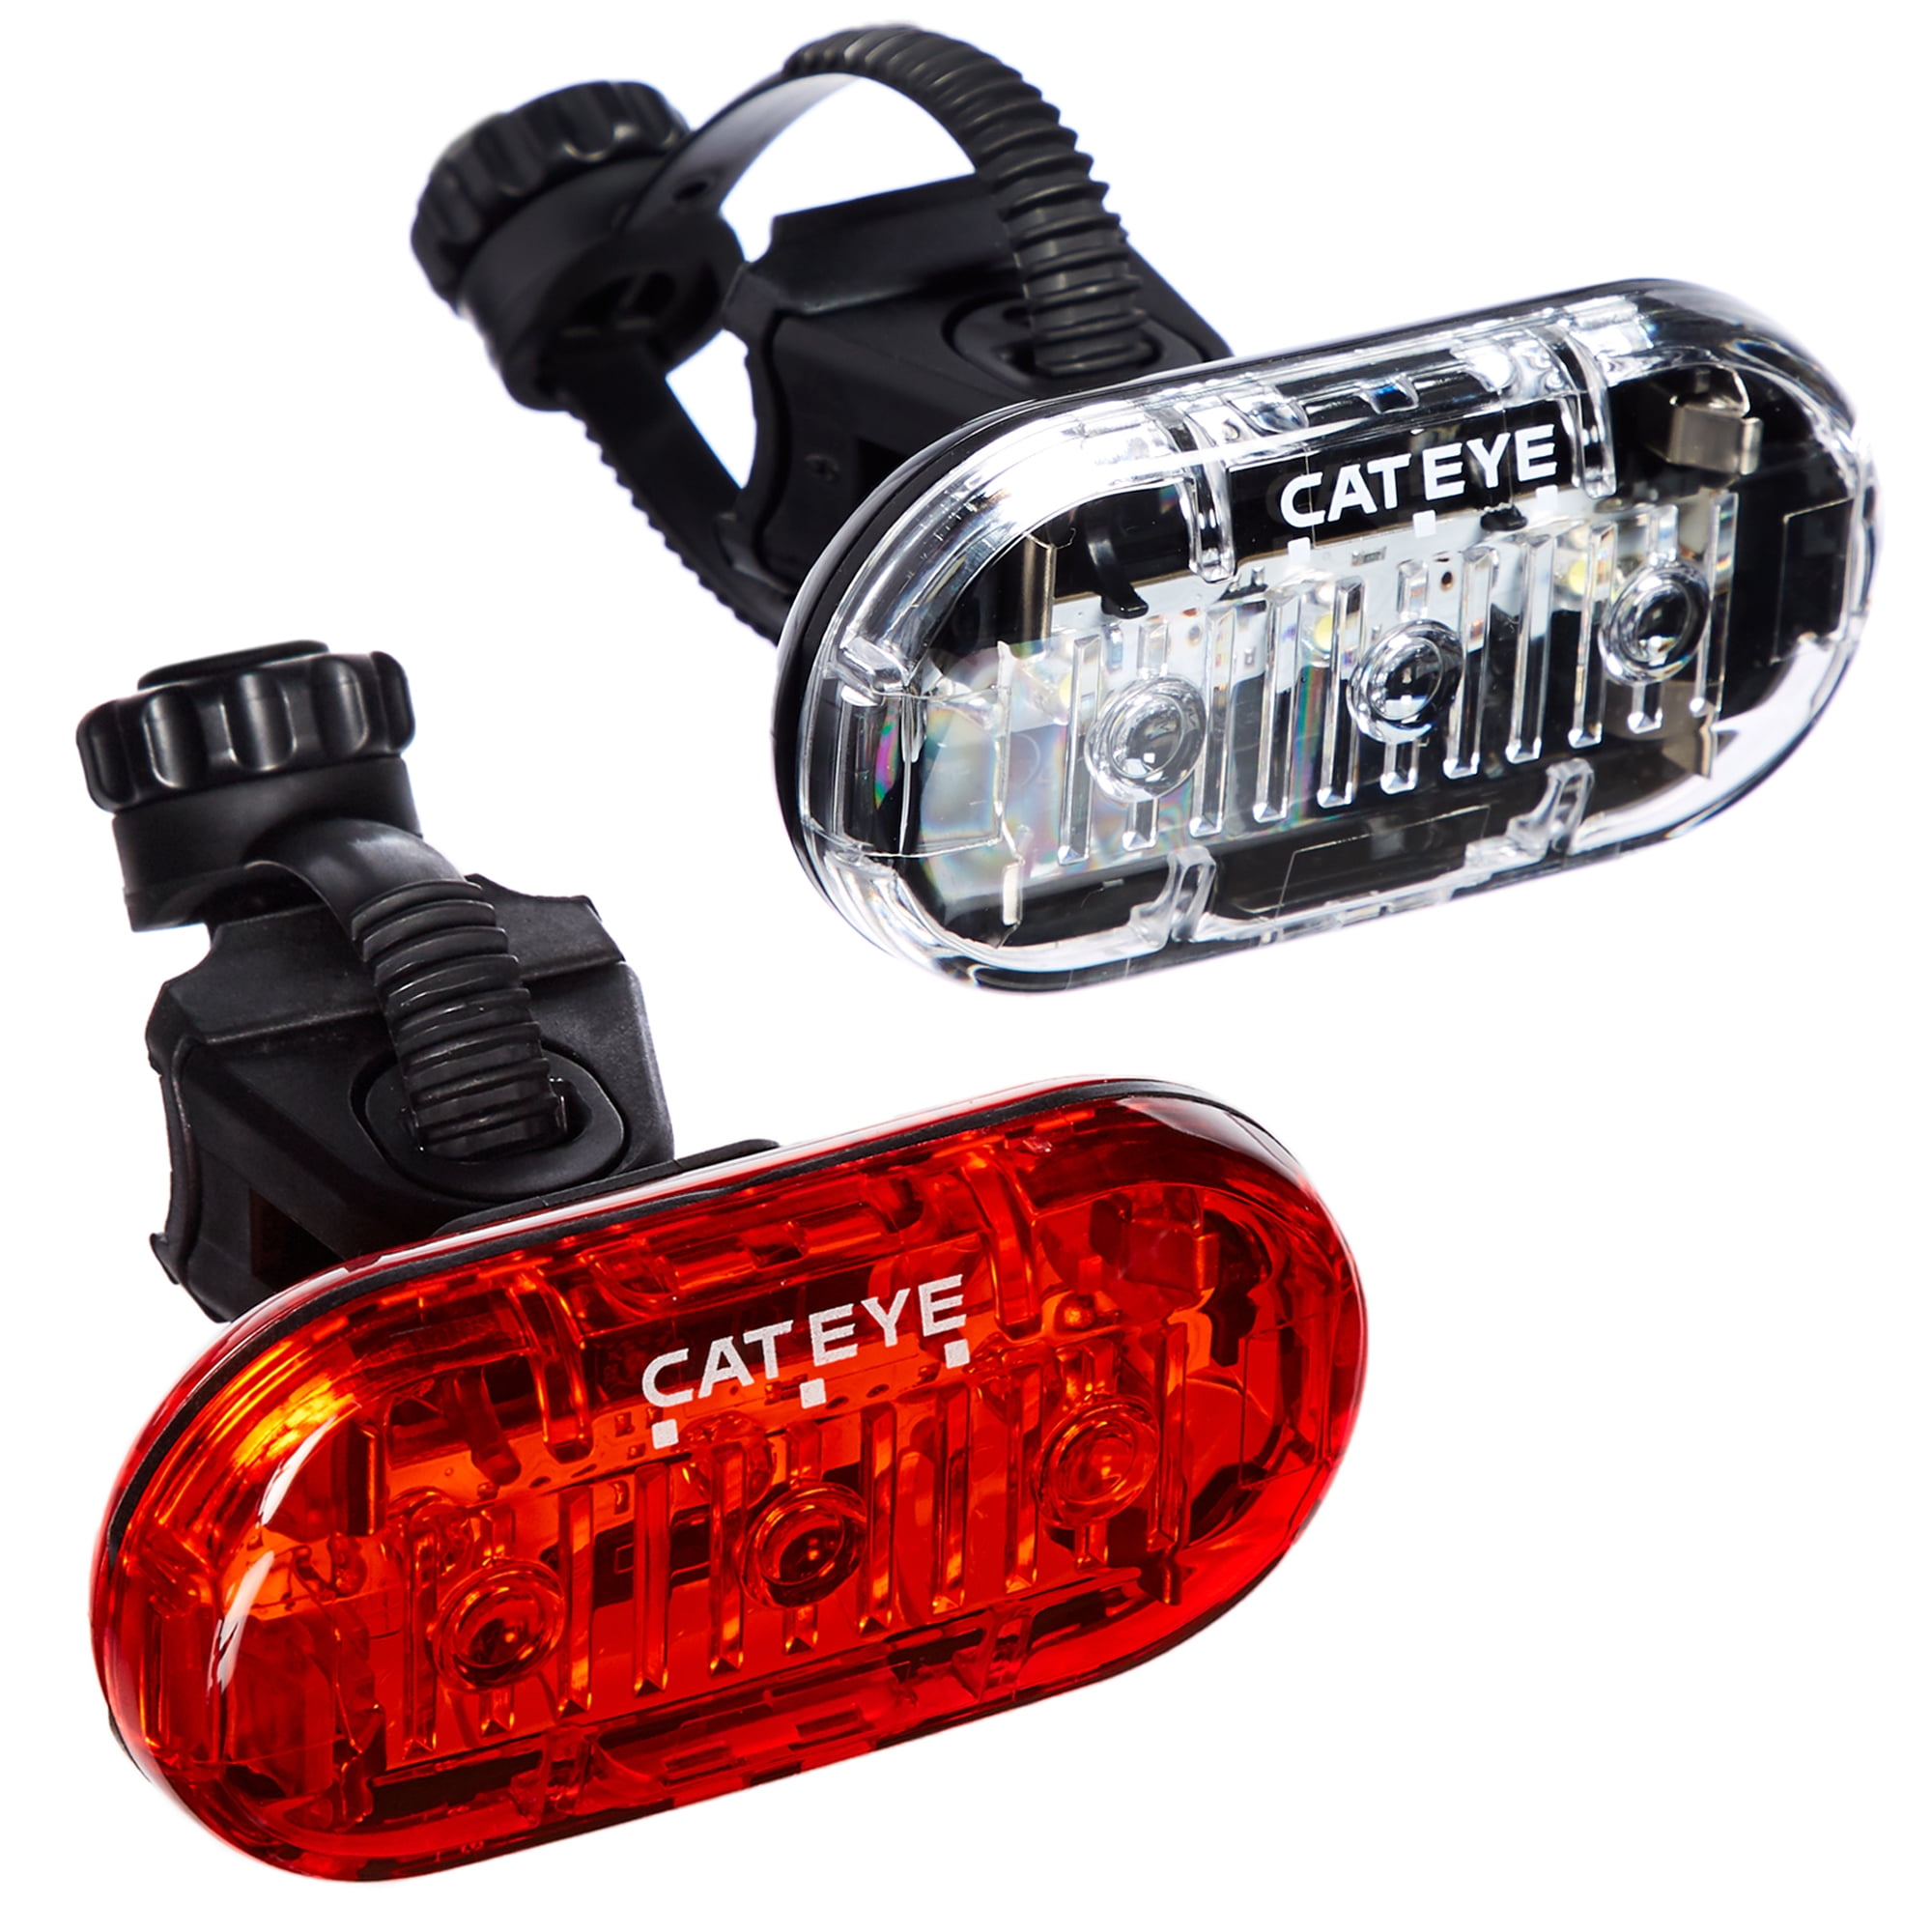 Cateye El135/Omni 5 Light Set Bike Bicycle Rear Front Head Tail Lights Lamp Led 